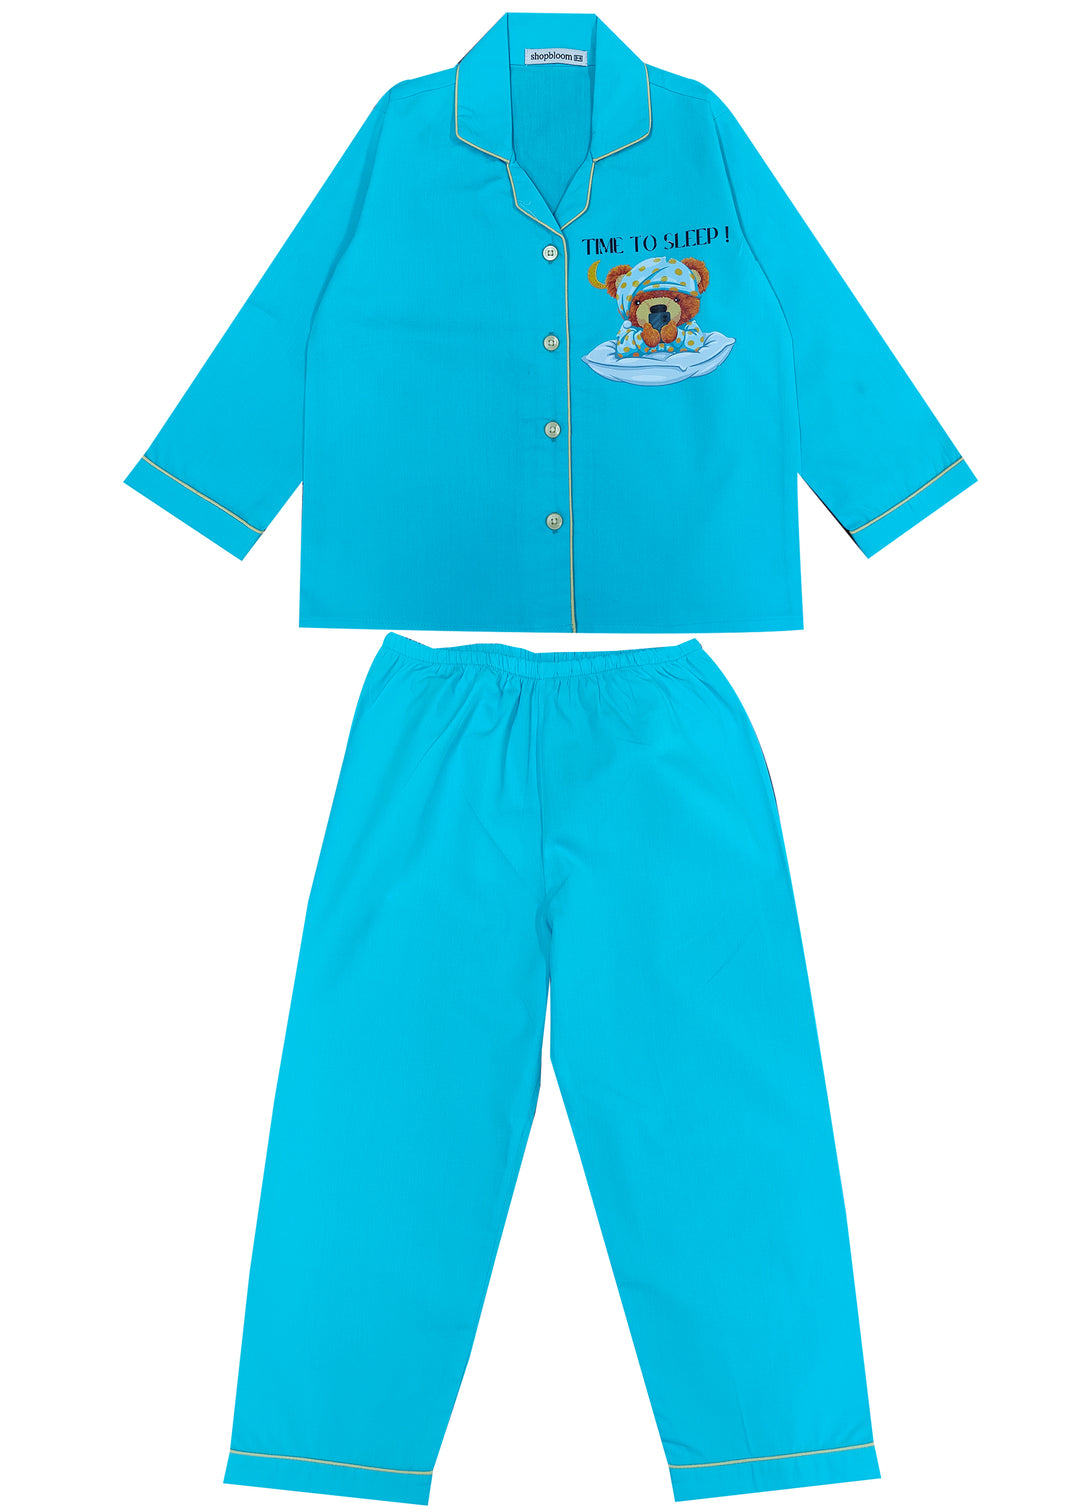 Time To Sleep Teddy Long Sleeve Kids Night Suit